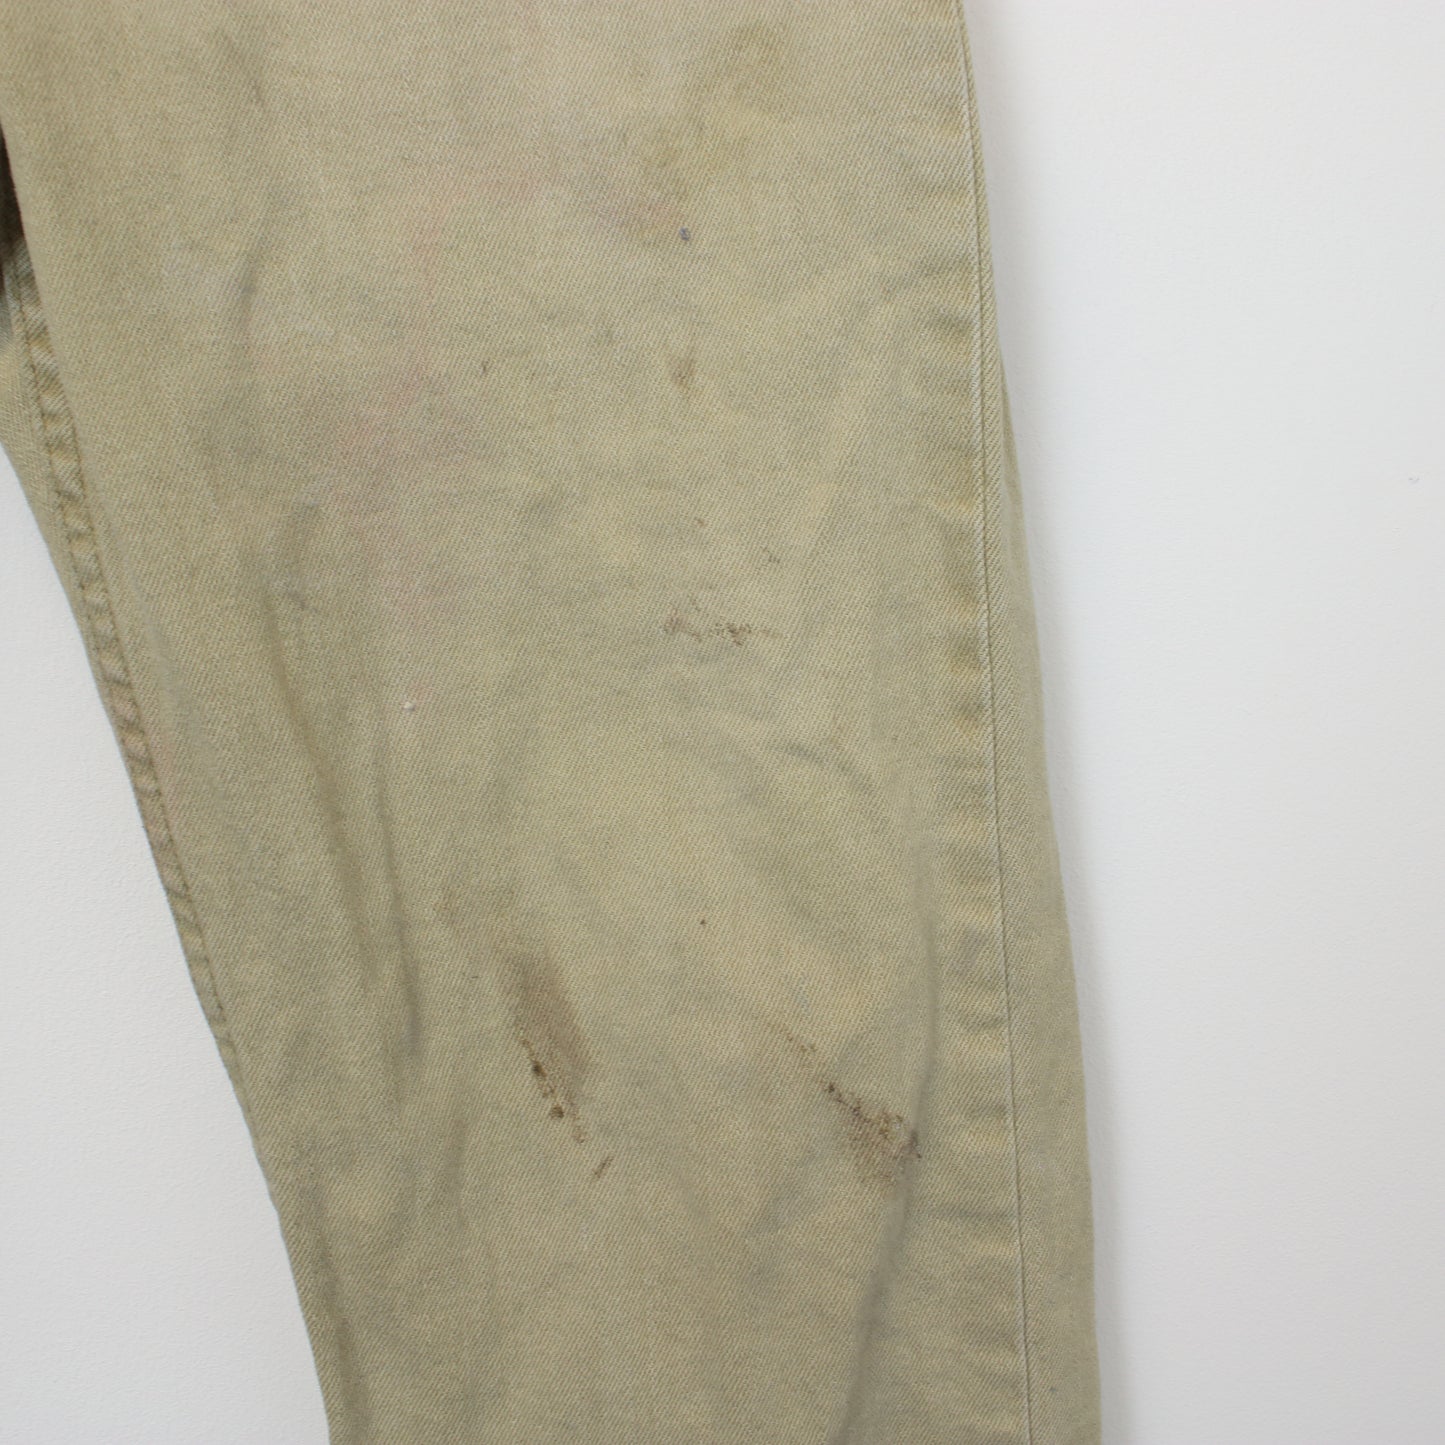 Vintage Wrangler Jeans in sand. Best fit W29 L30